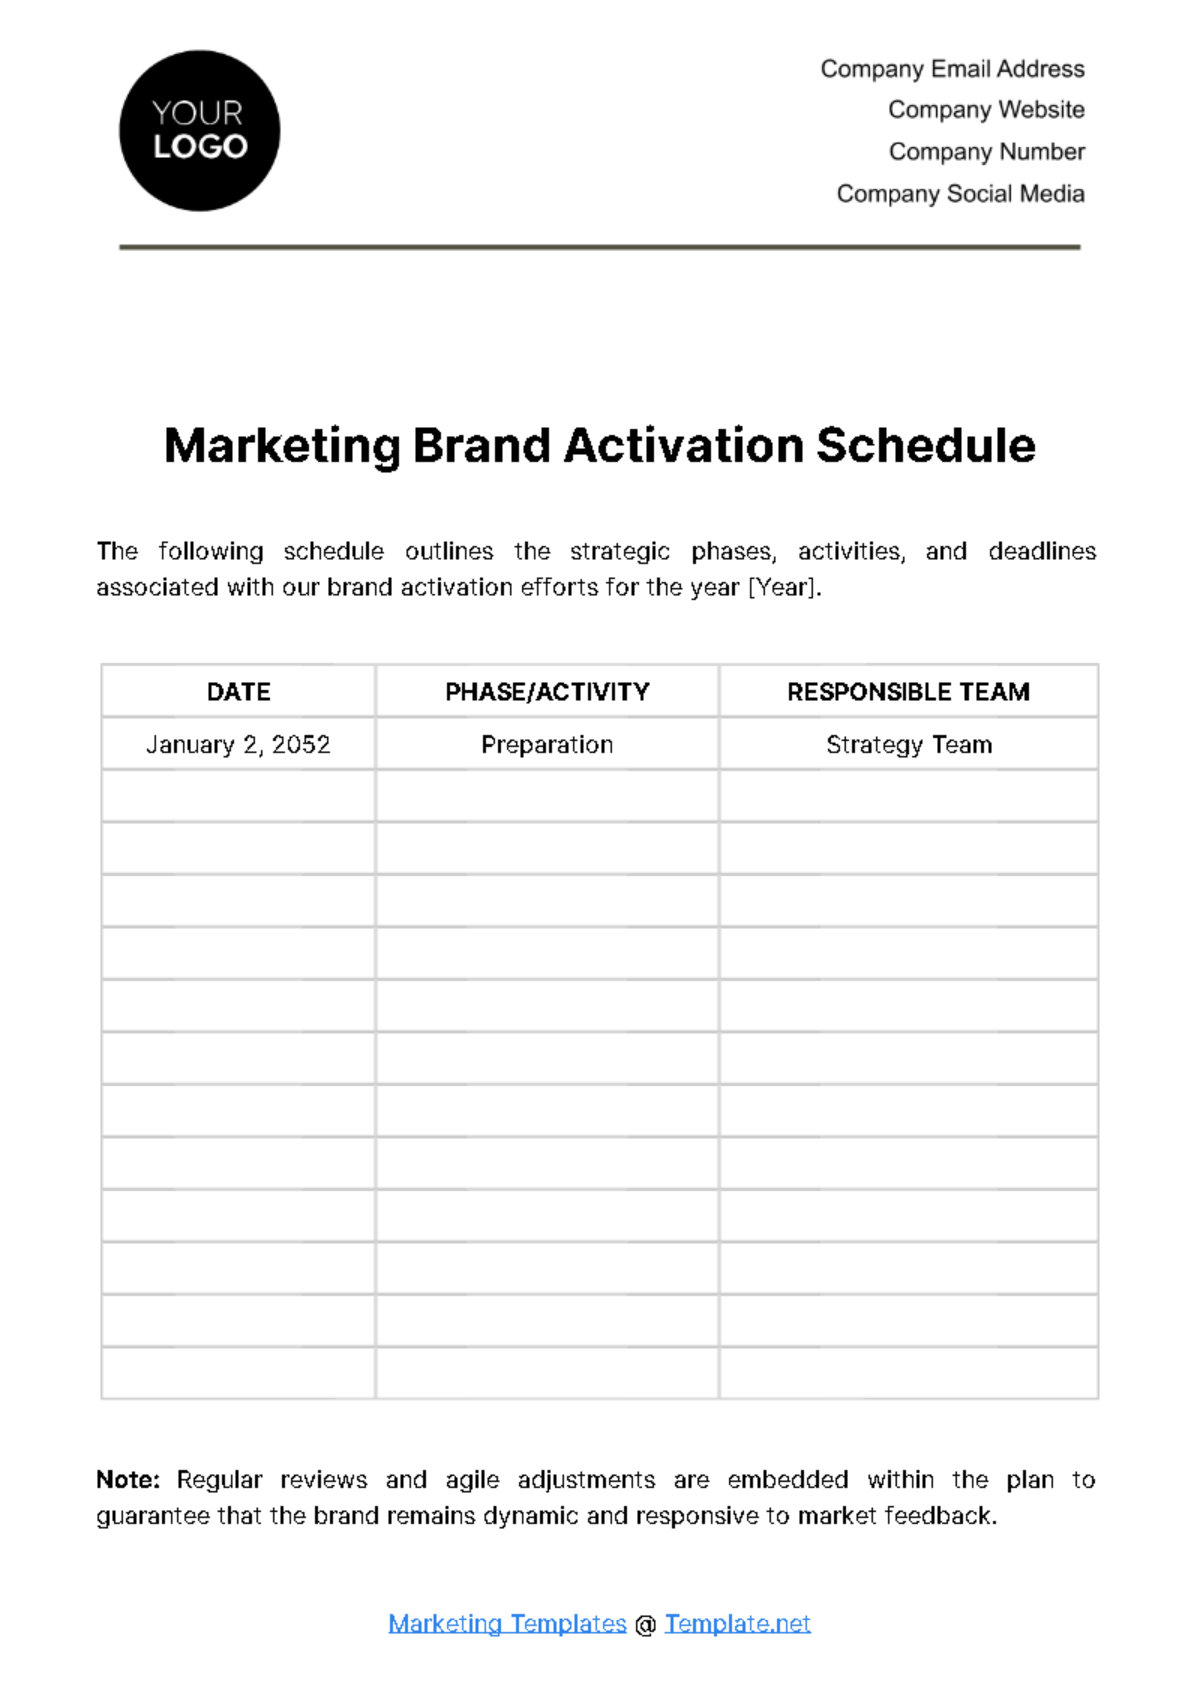 Free Marketing Brand Activation Schedule Template